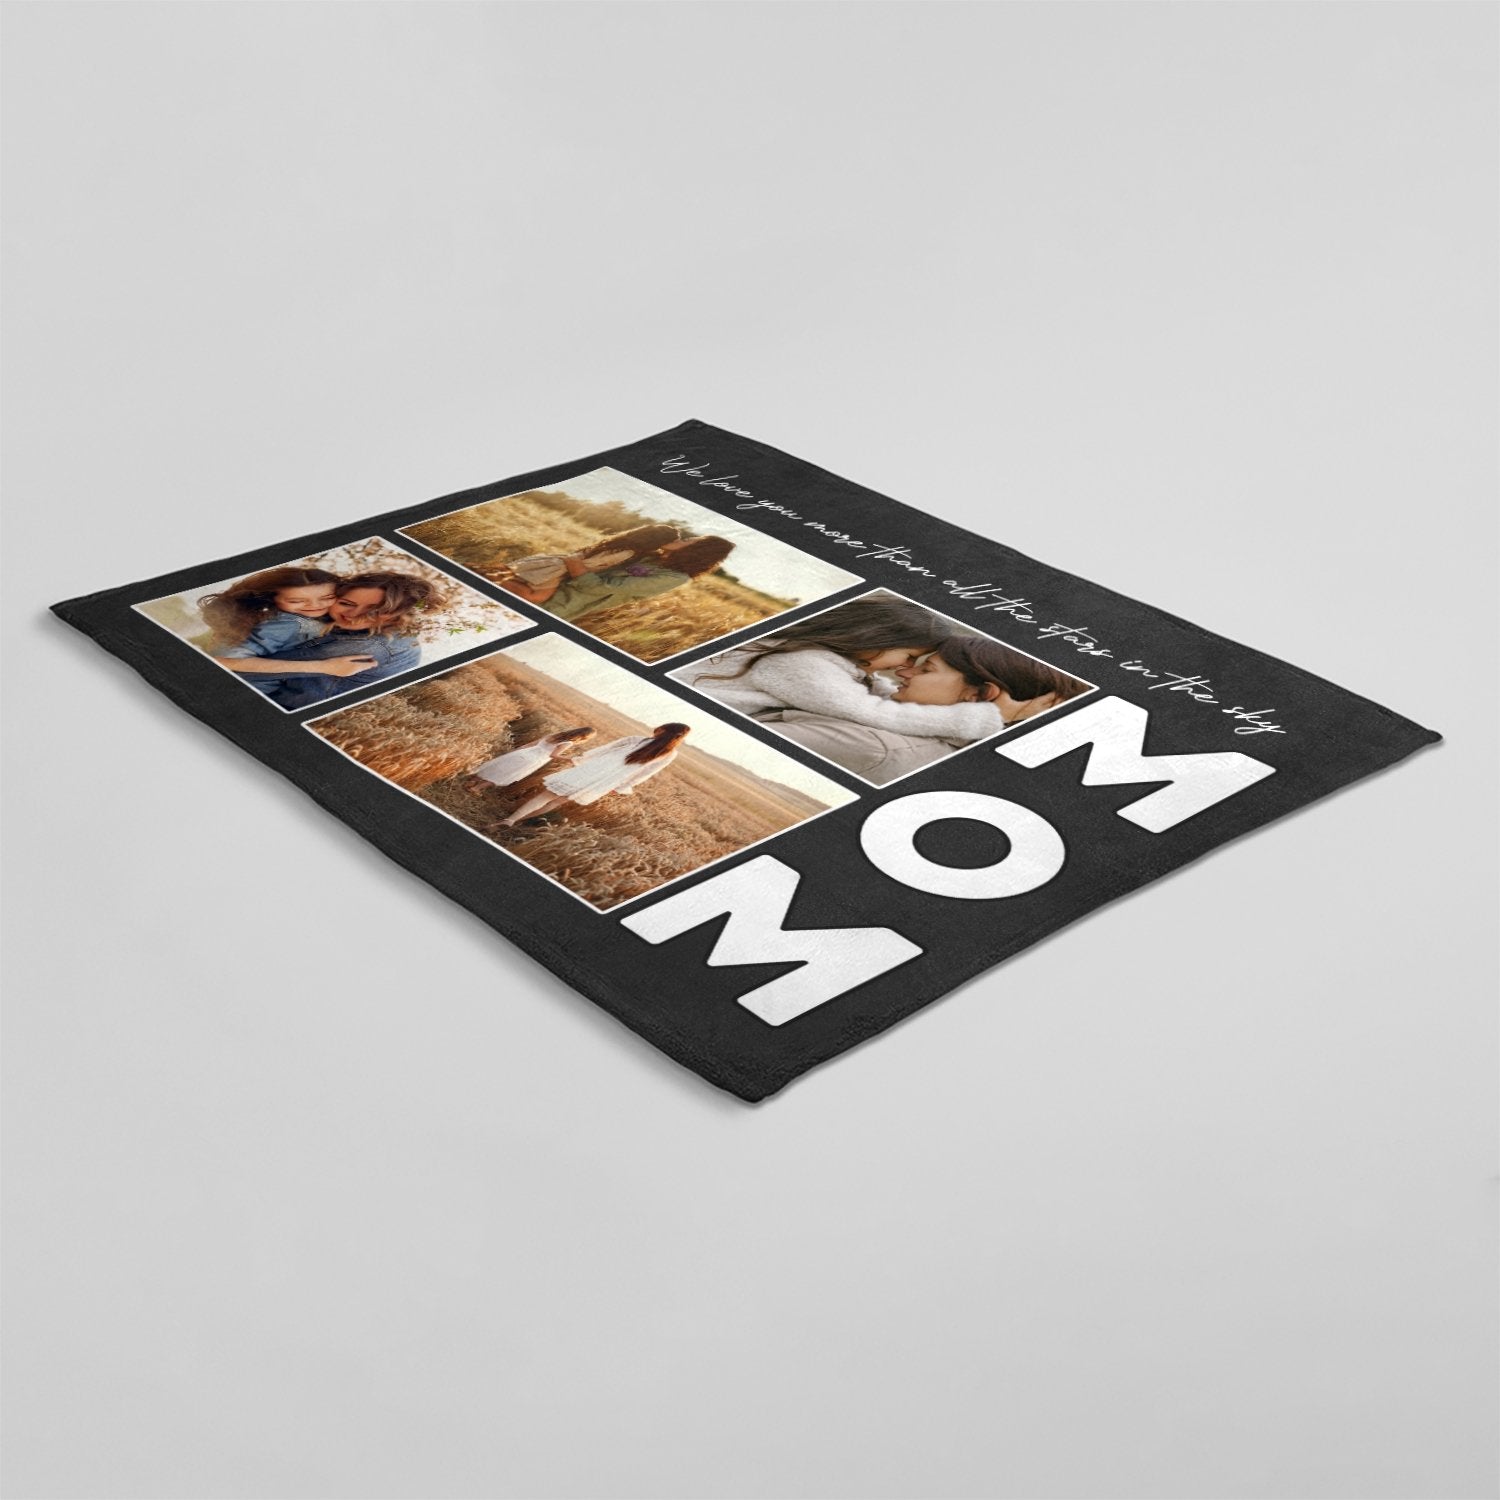 Mom Custom Photo, Personalized Text Blanket